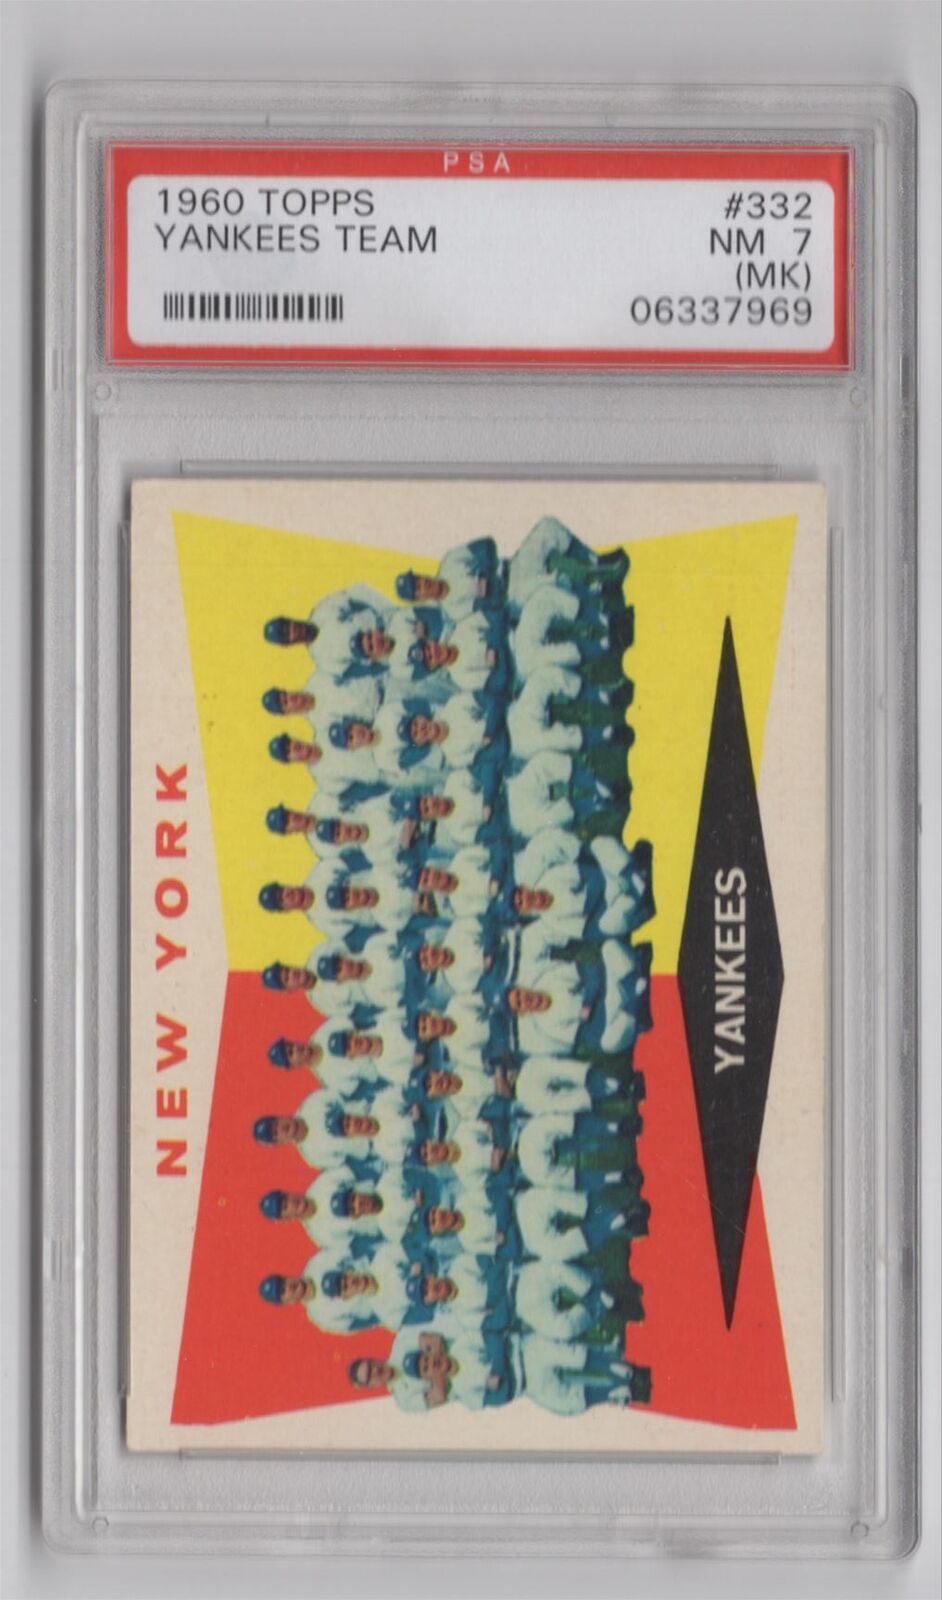 1960 Topps Yankees Team Card PSA 7 #332 (MK)